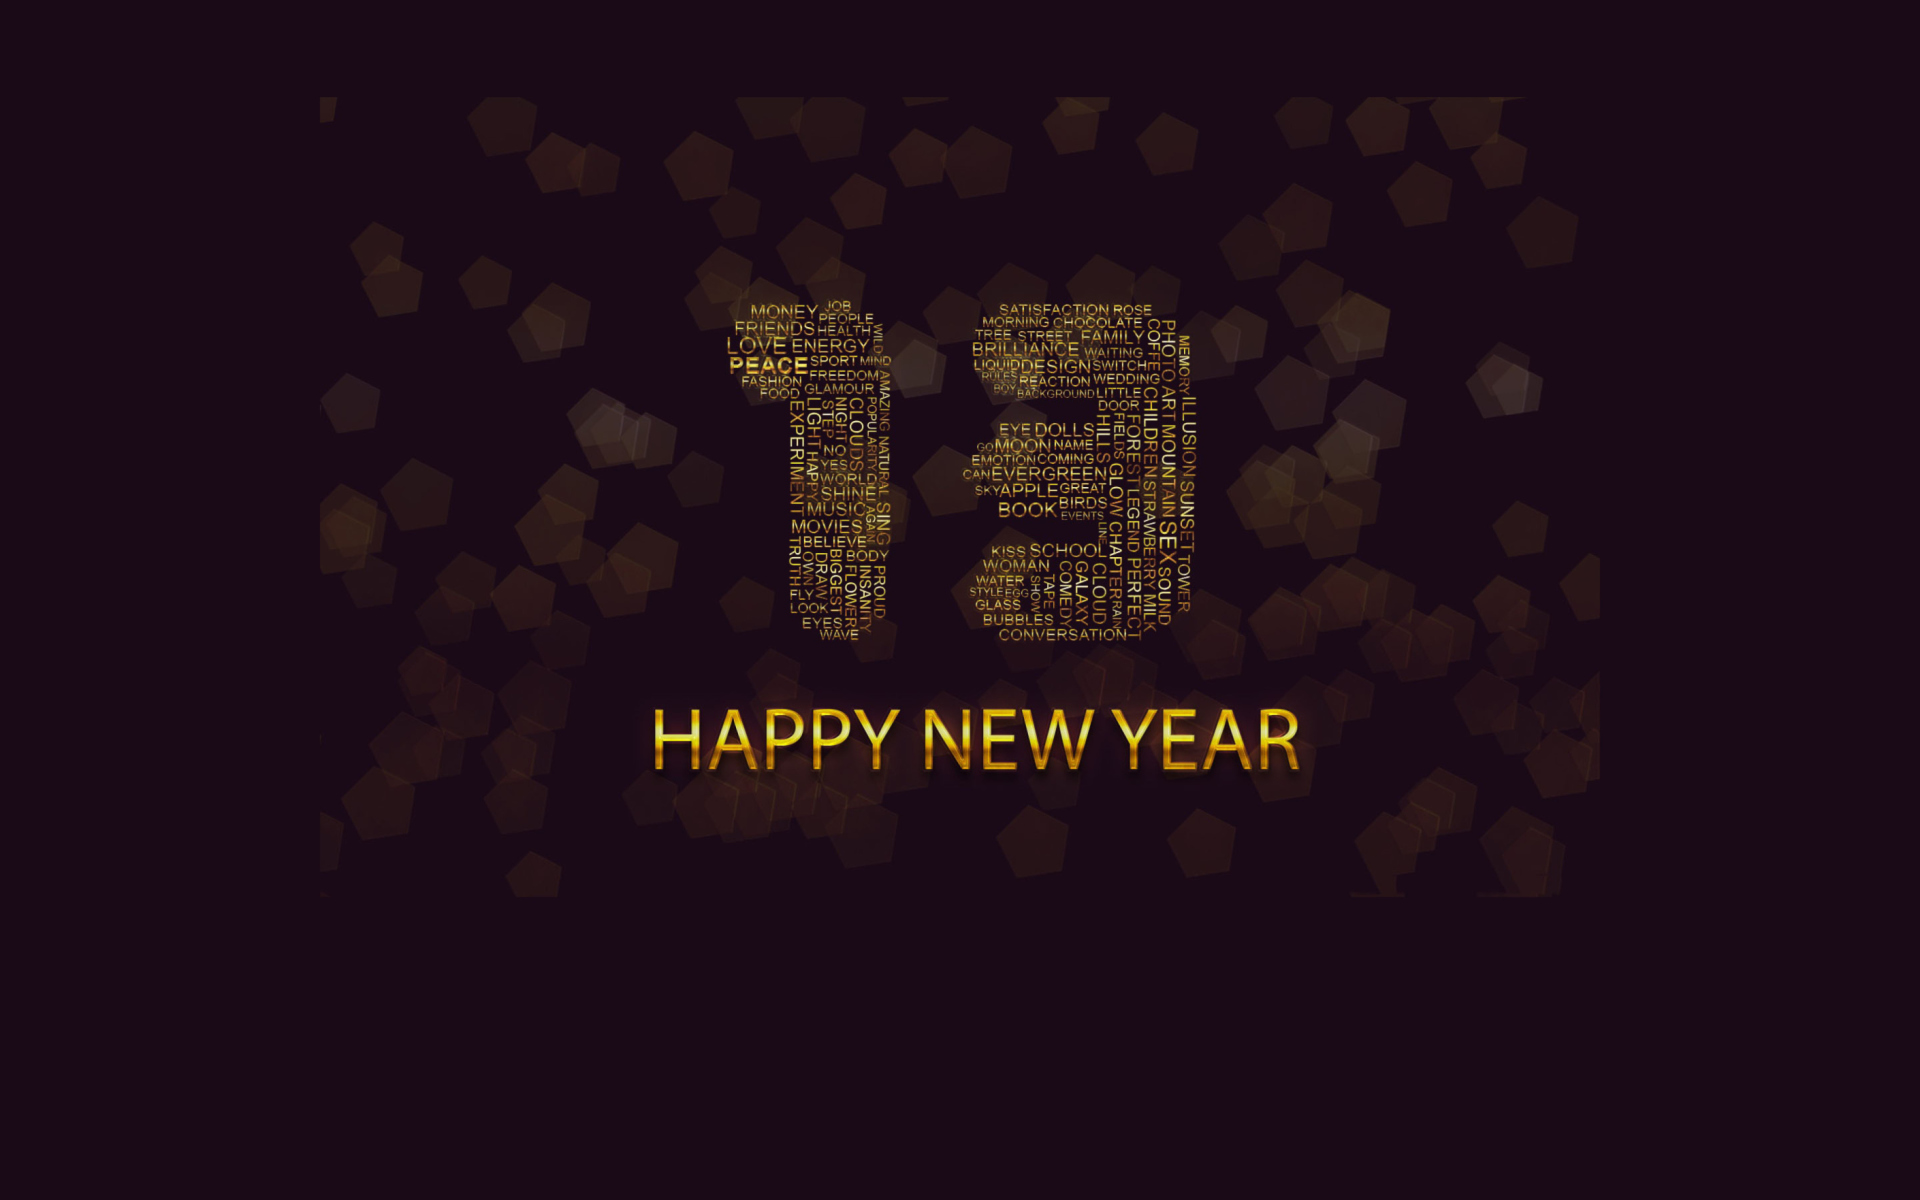 Happy New Year 2013 wallpaper 1920x1200